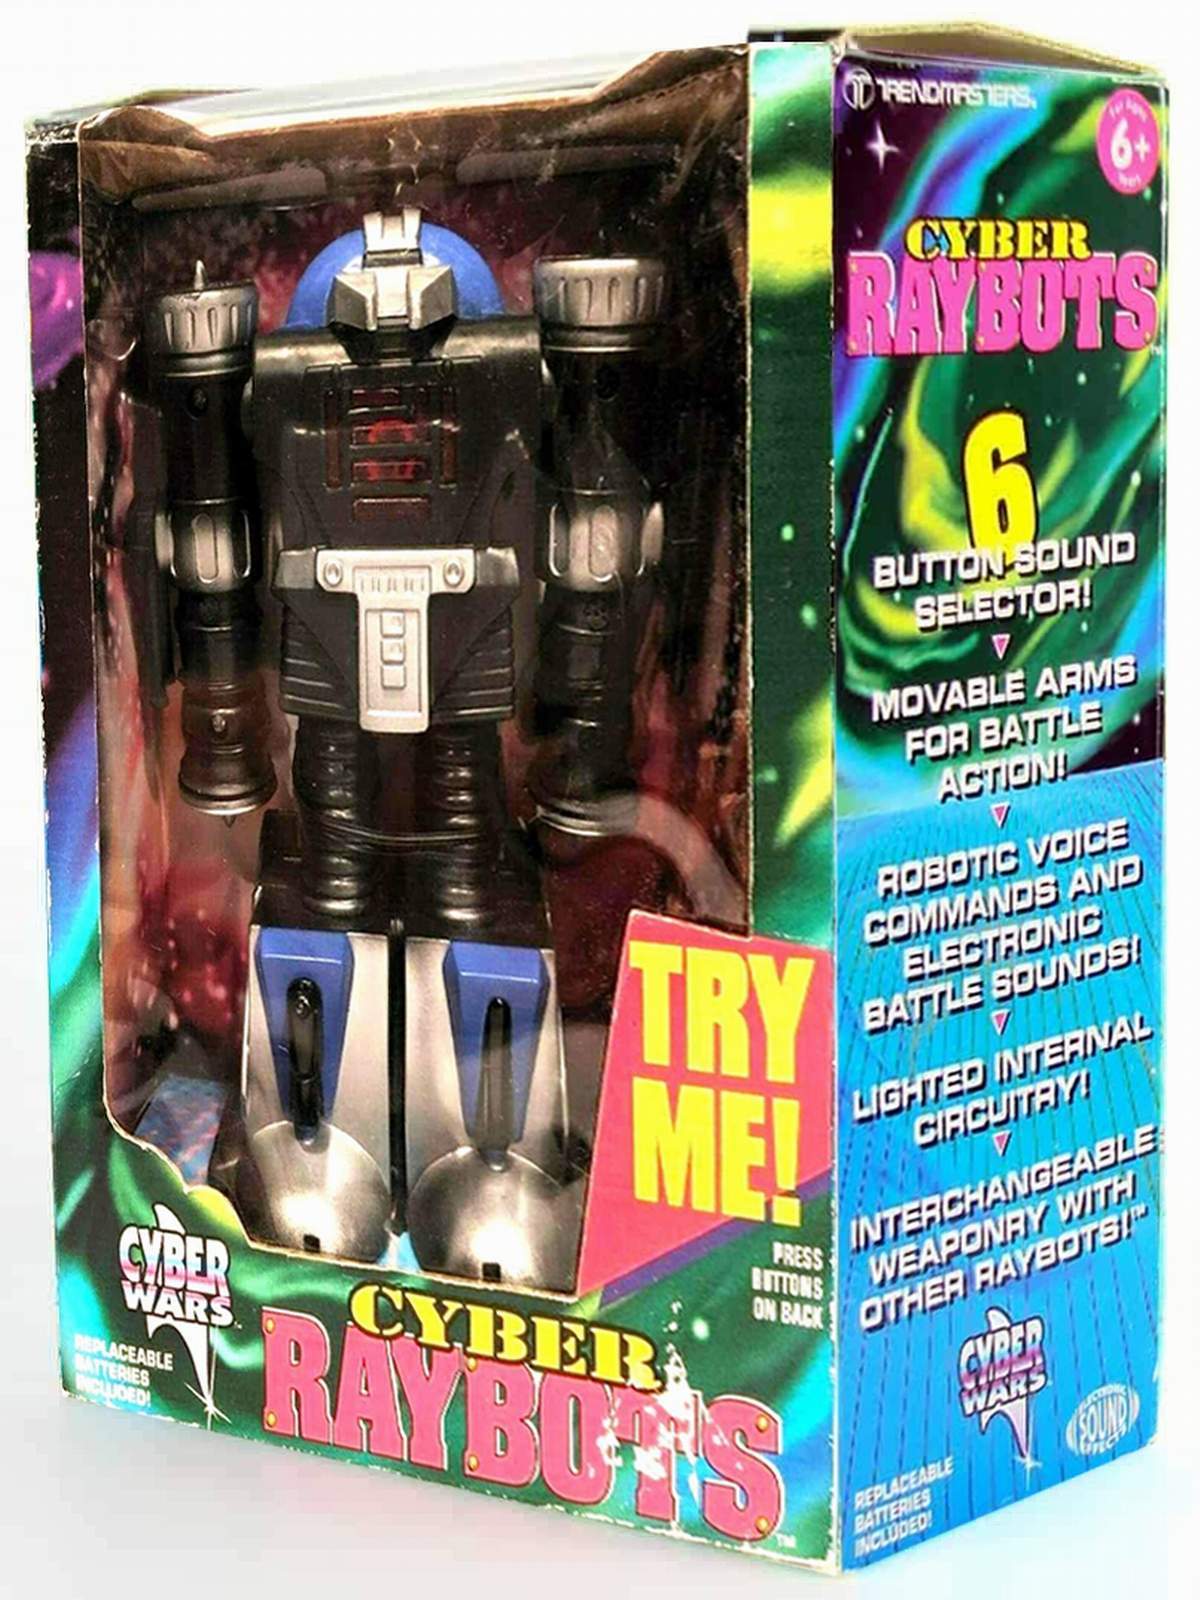 Cyber Raybots